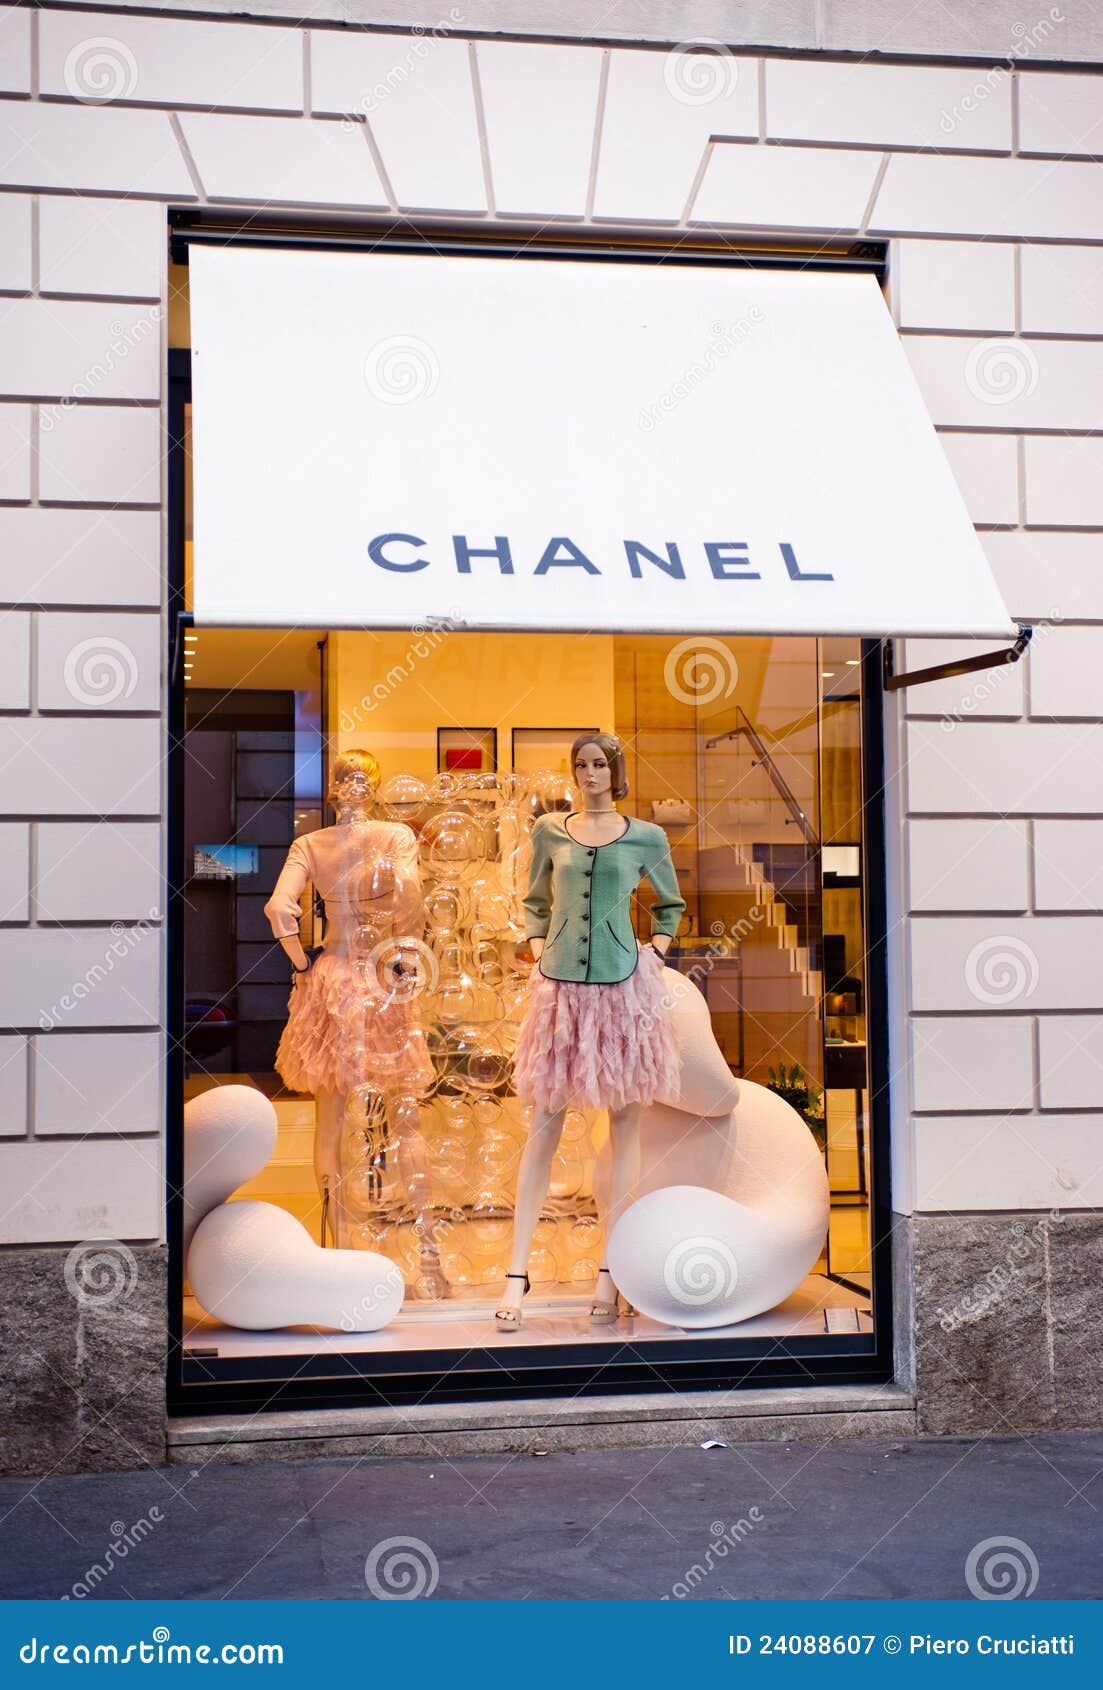 Shopping in Milan: Chanel Store Via Montenapoleone Editorial Photography - Image of montenapoleone: 24088607